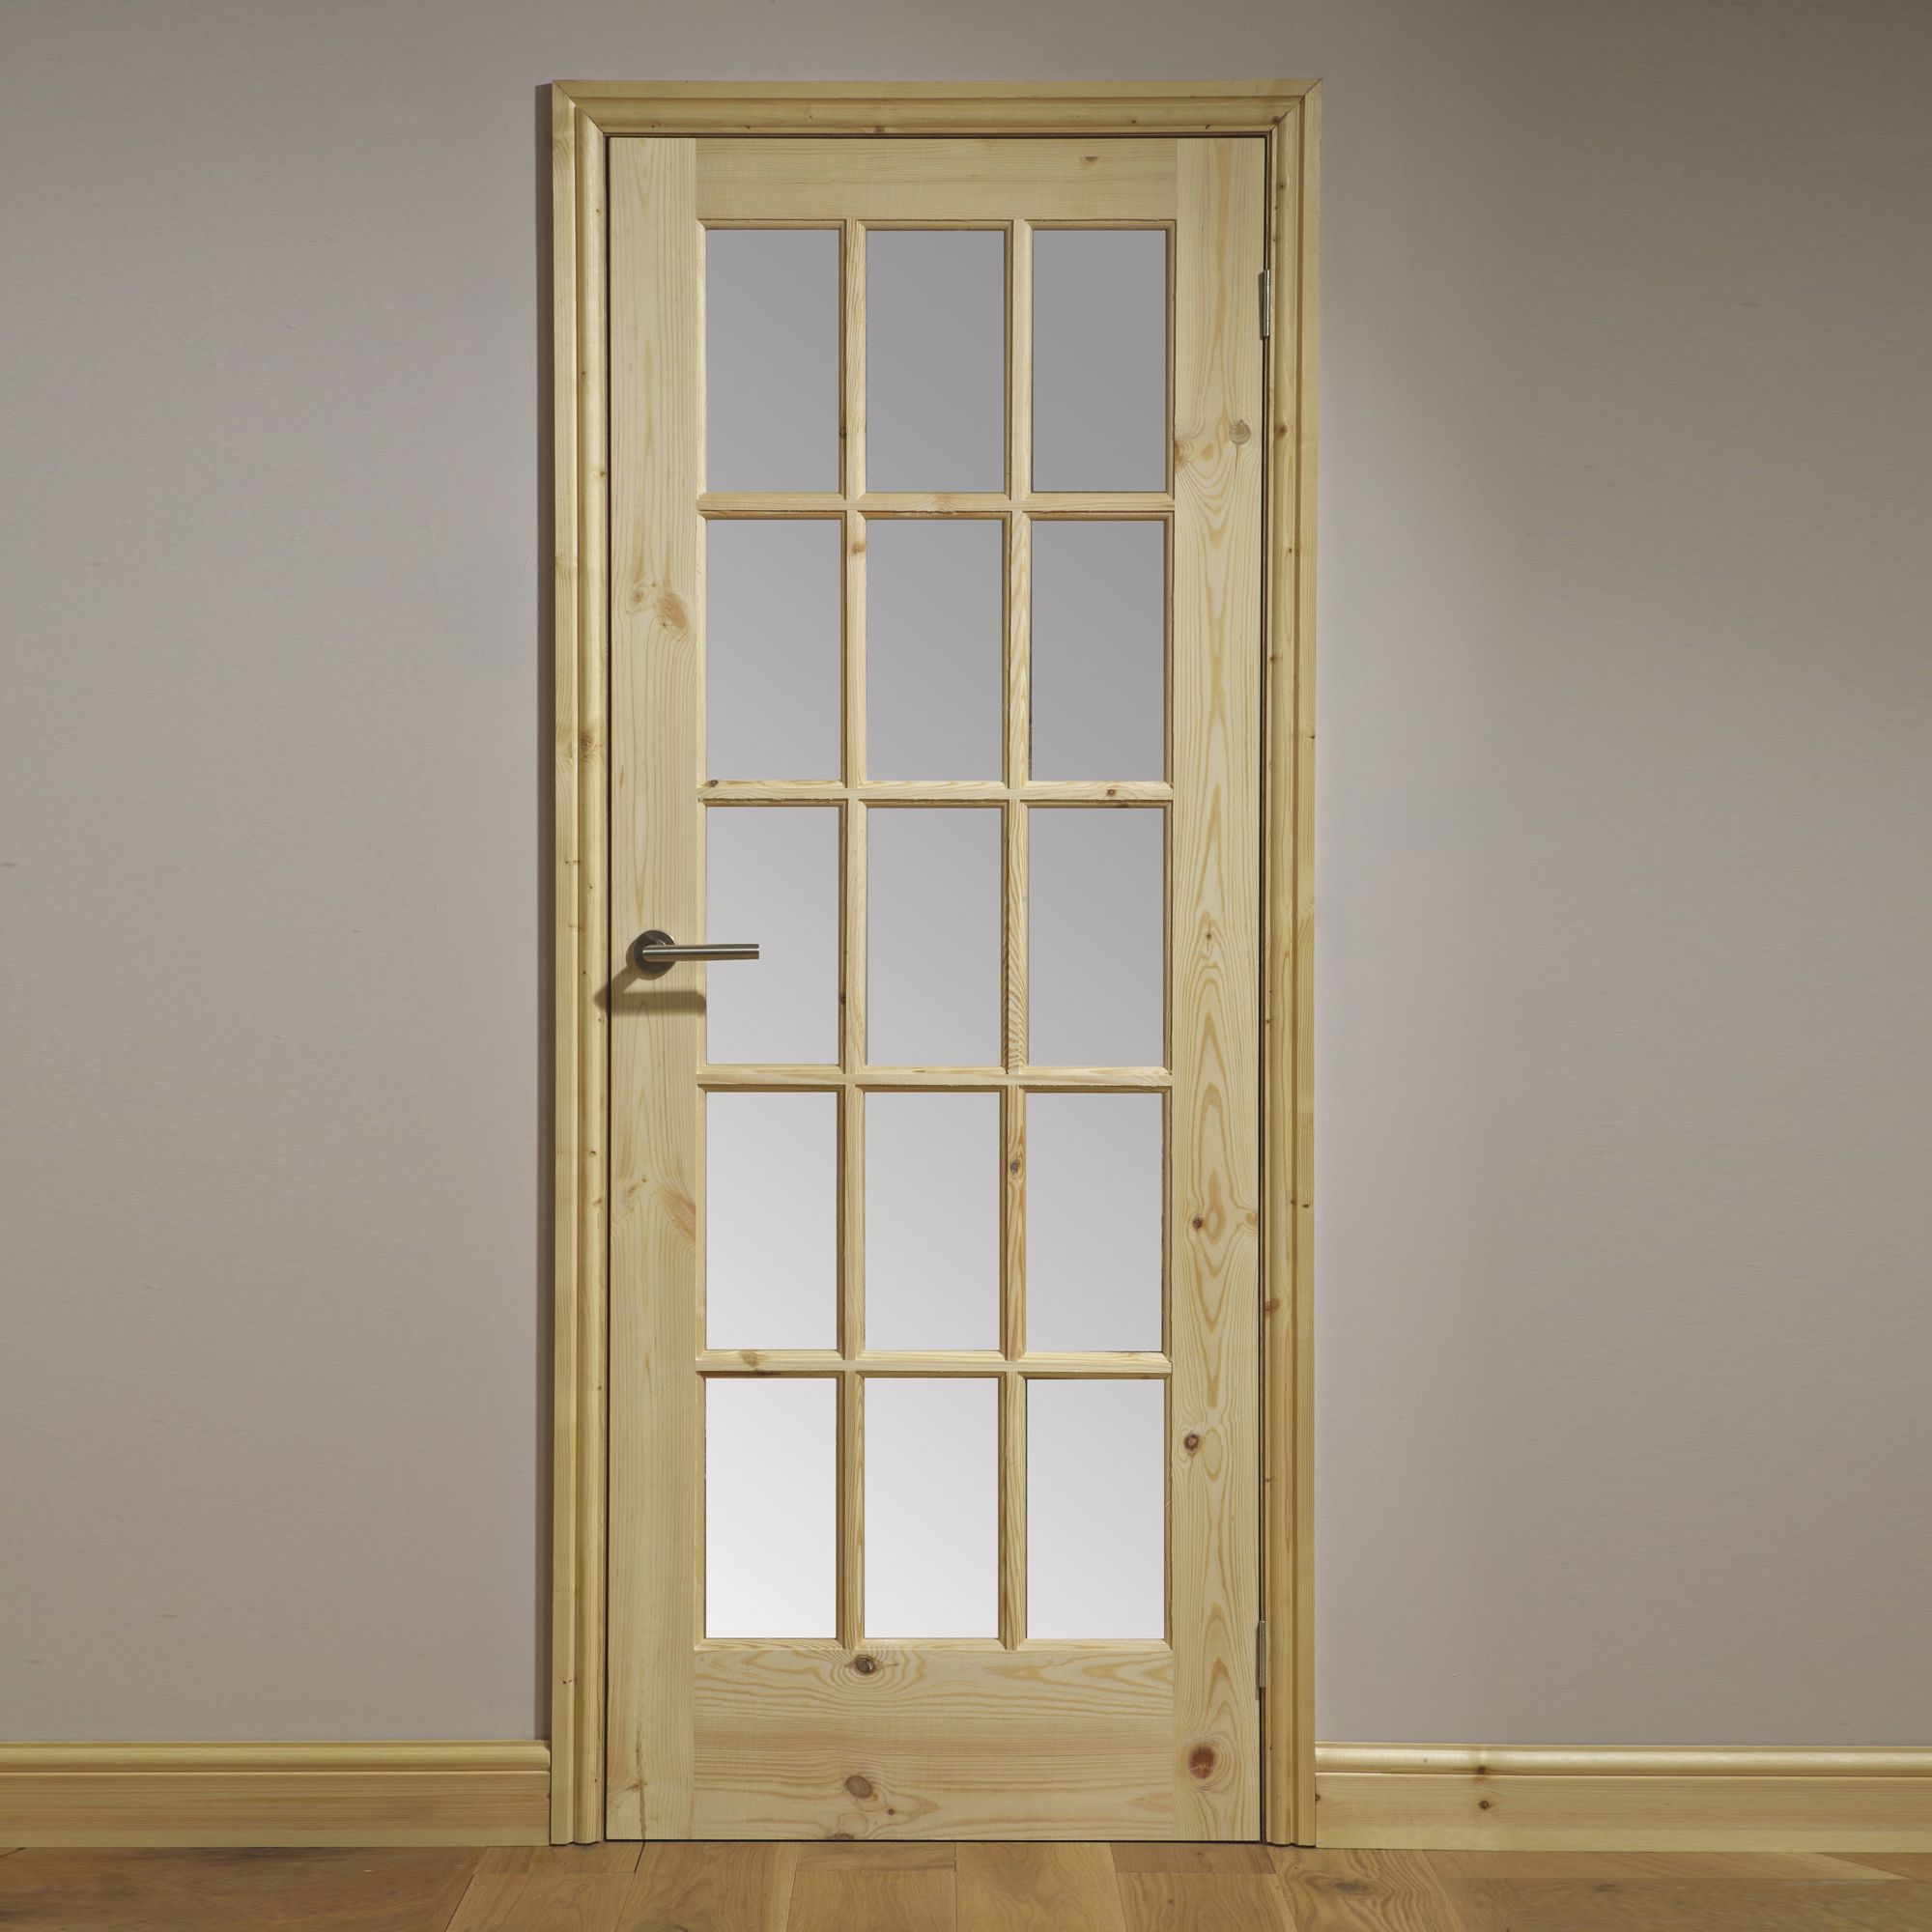 15 Lite Glazed Internal Door, (H)1981mm (W)838mm (T)35mm